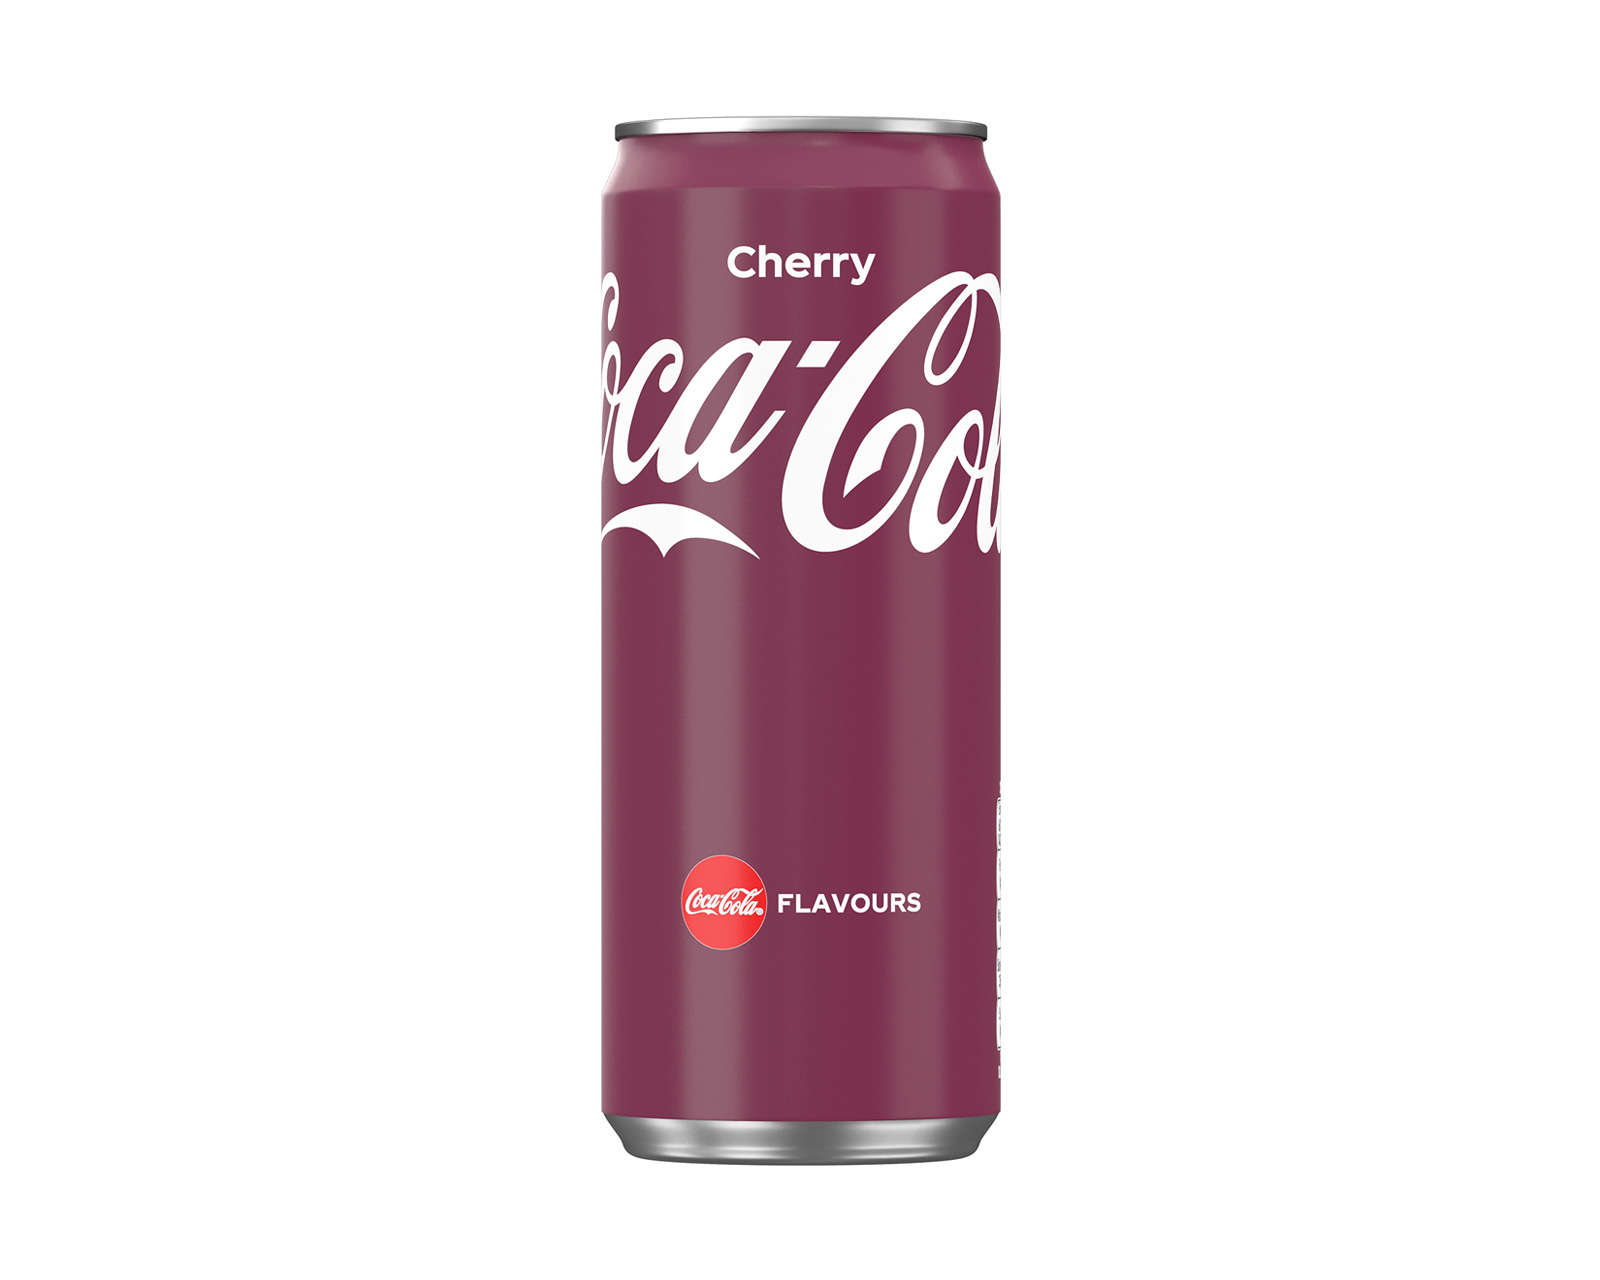 Akrobatik Gendanne Se insekter Coca-Cola Cherry 33cl - MaxGaming.dk